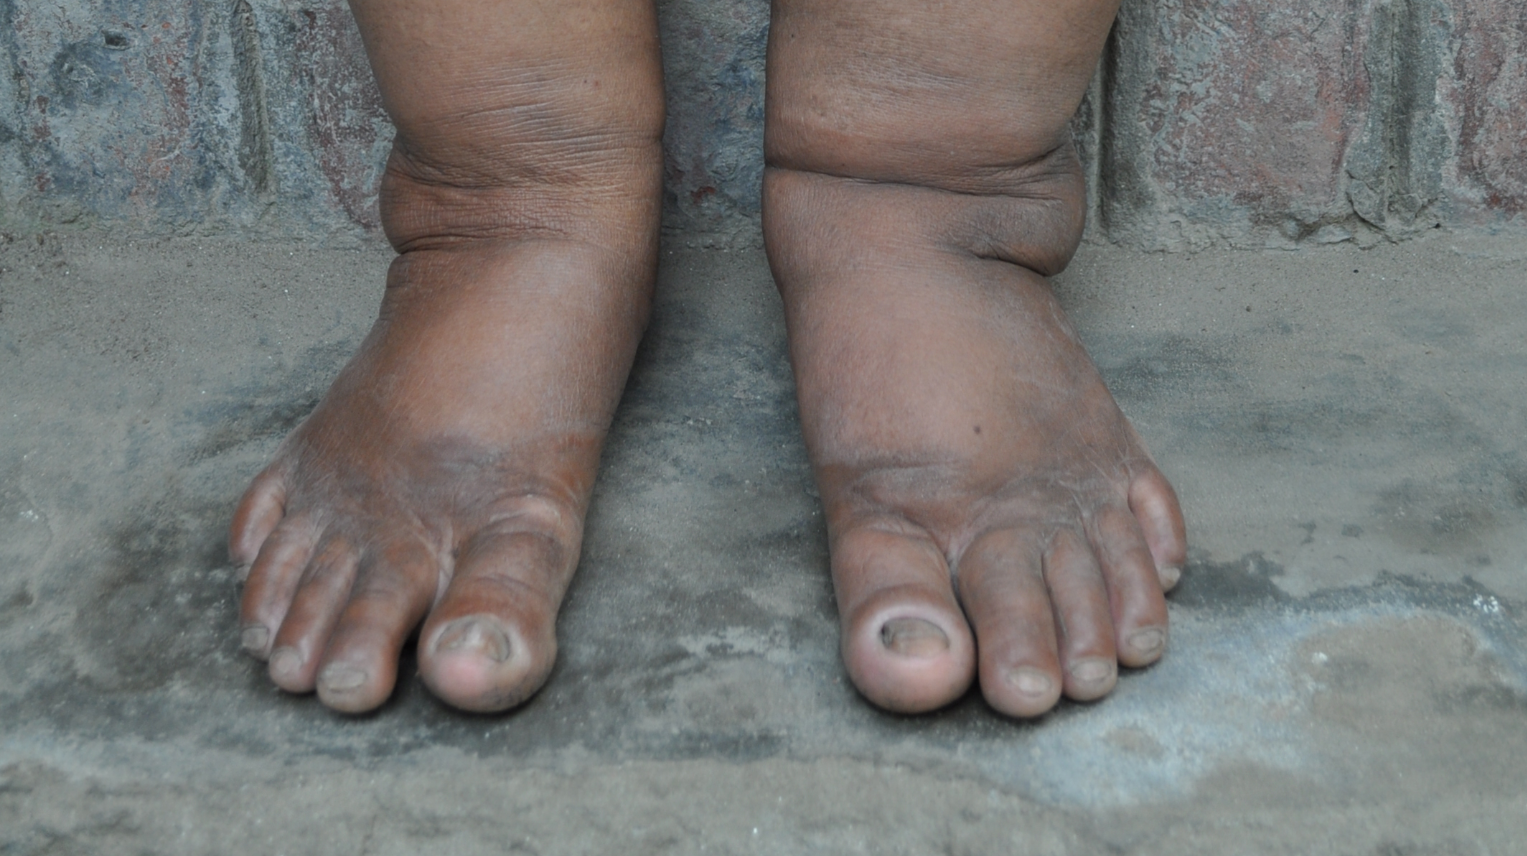 A patient in Bangladesh with Lymphodema - a symptom of LF